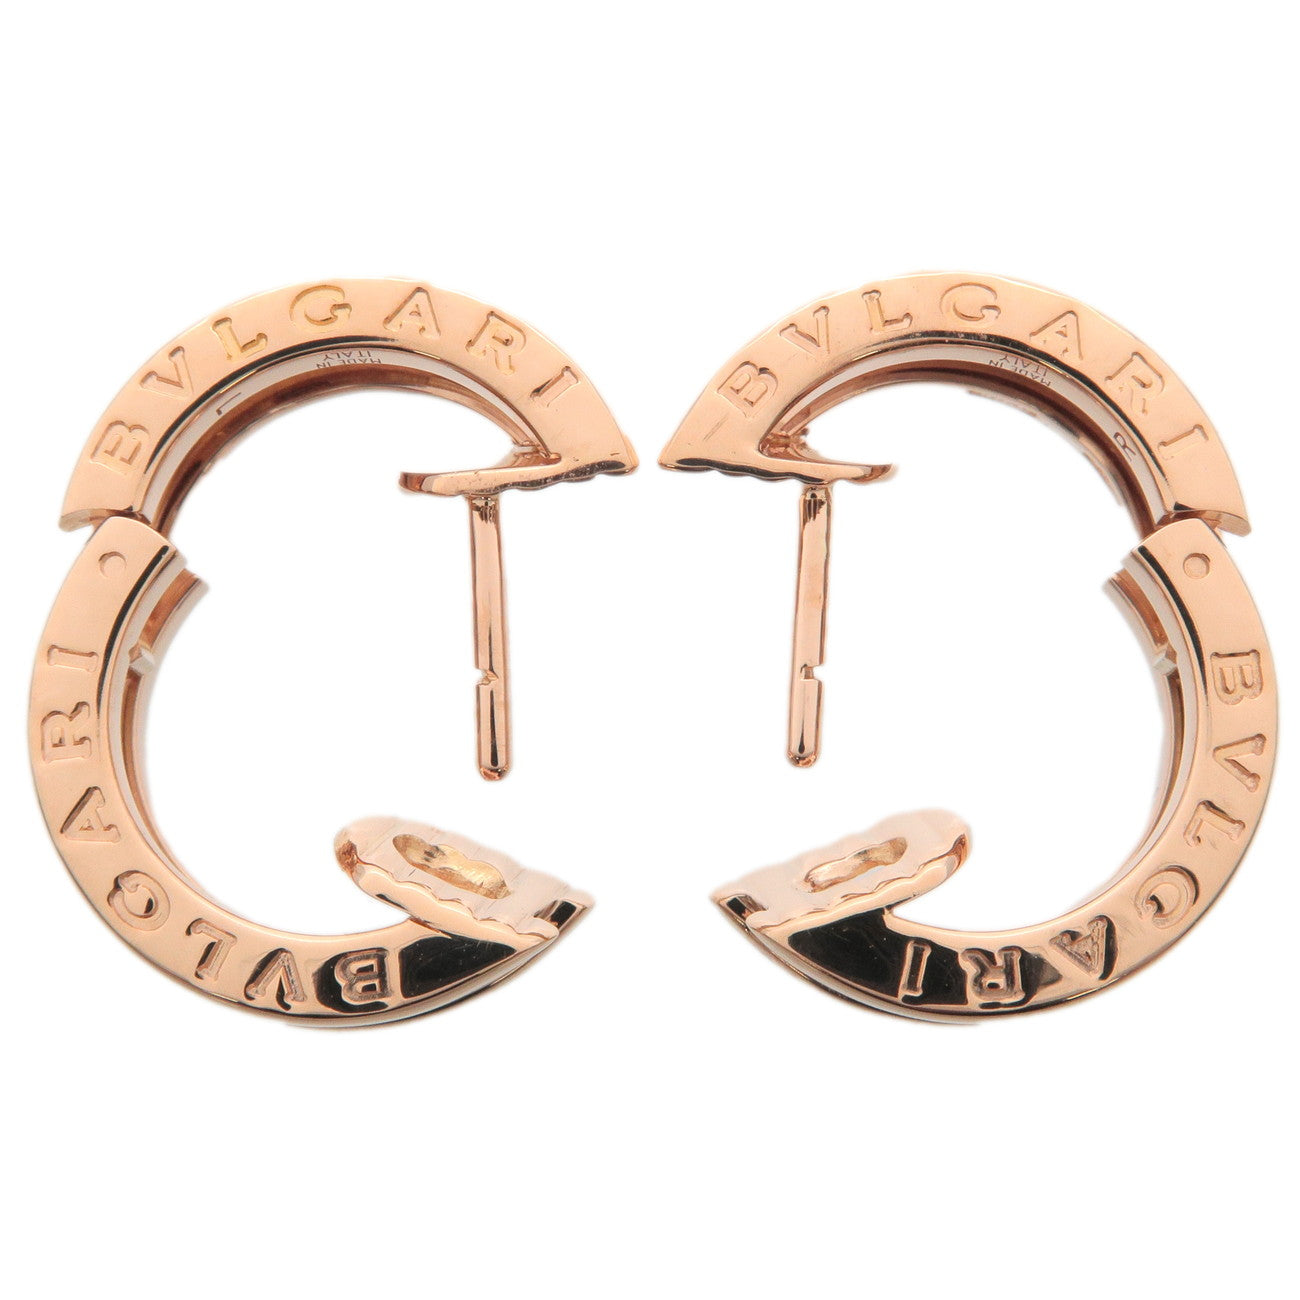 Serpenti Seduttori earrings in rose gold with rubellite eyes | Bulgari |  The Jewellery Editor